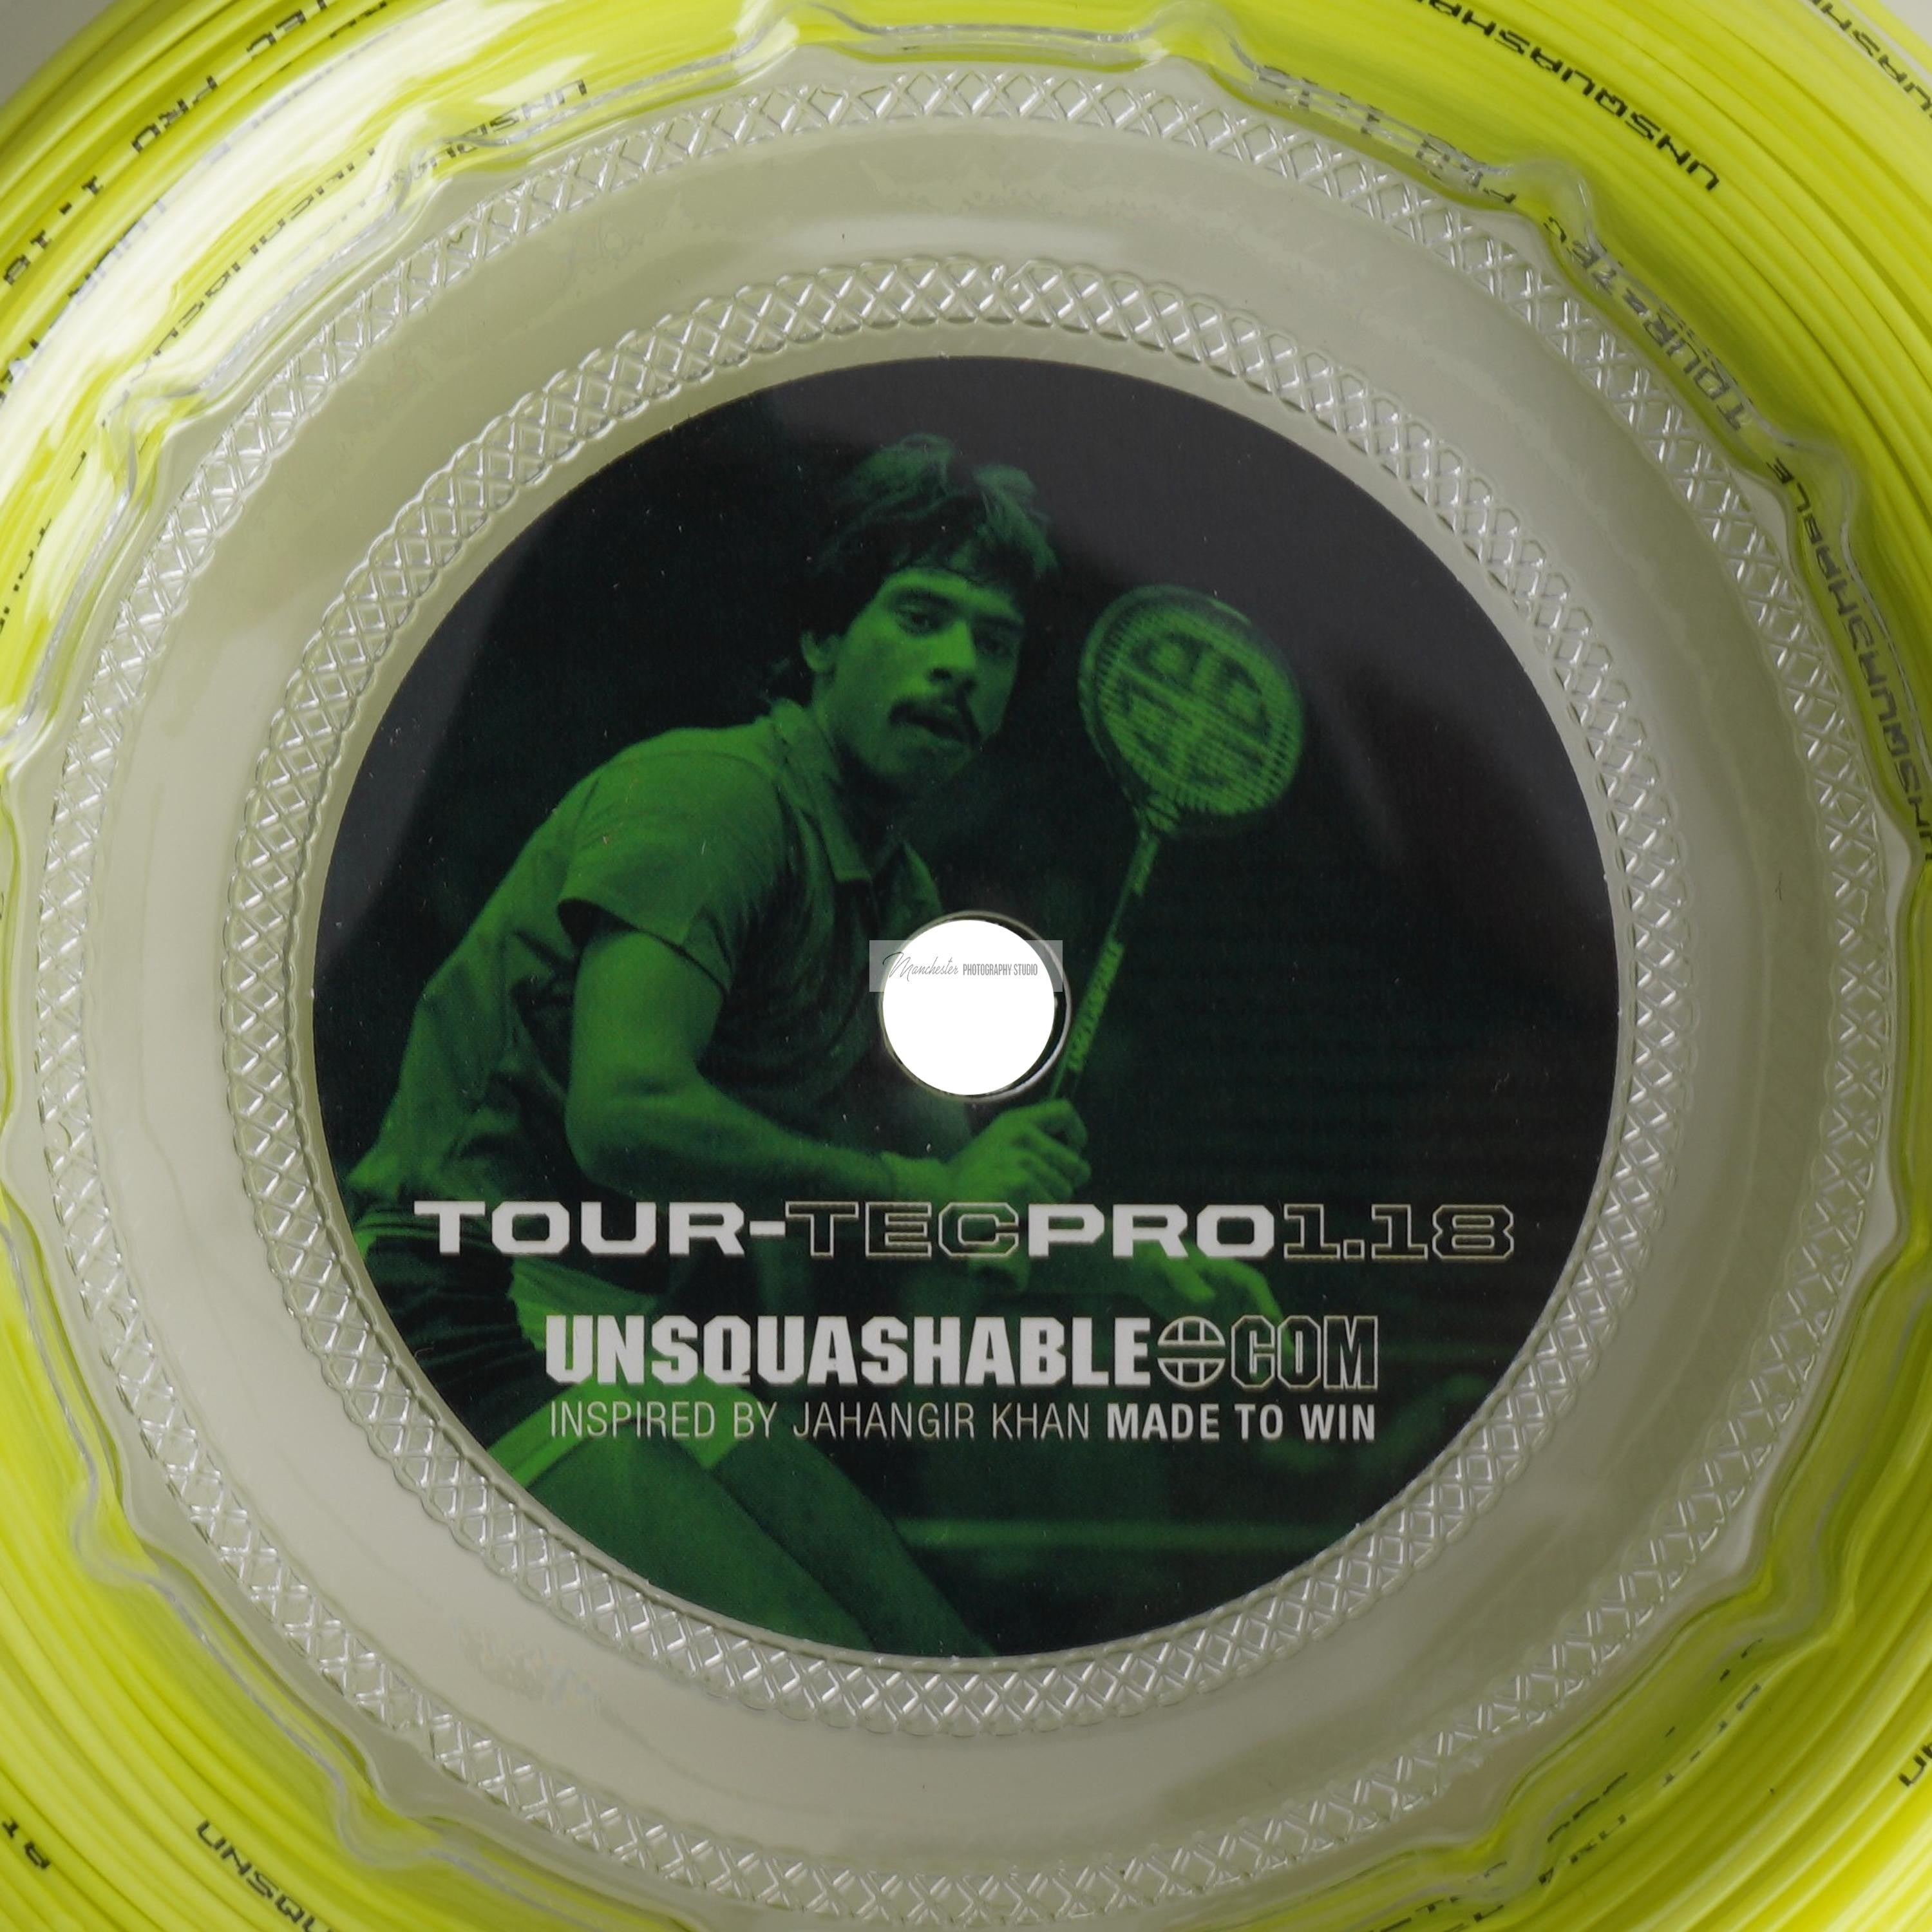 UNSQUASHABLE Tour-Tec Pro 1.18 (Neon Yellow) 100 M rulle - Squashstrenge